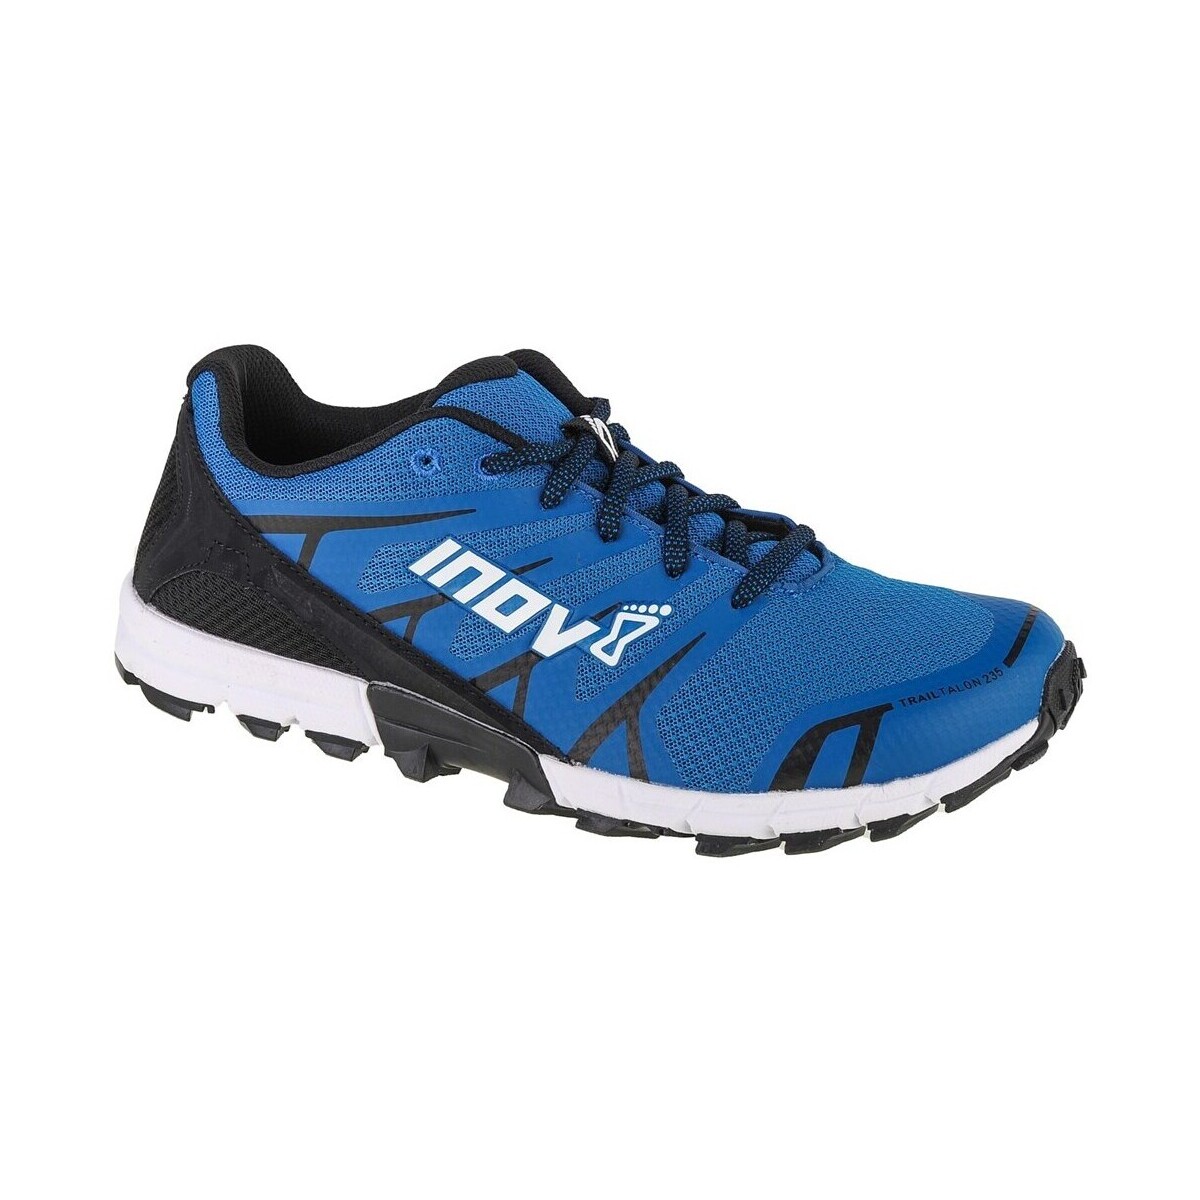 inov 8  tailtalon 235  men's running trainers in blue